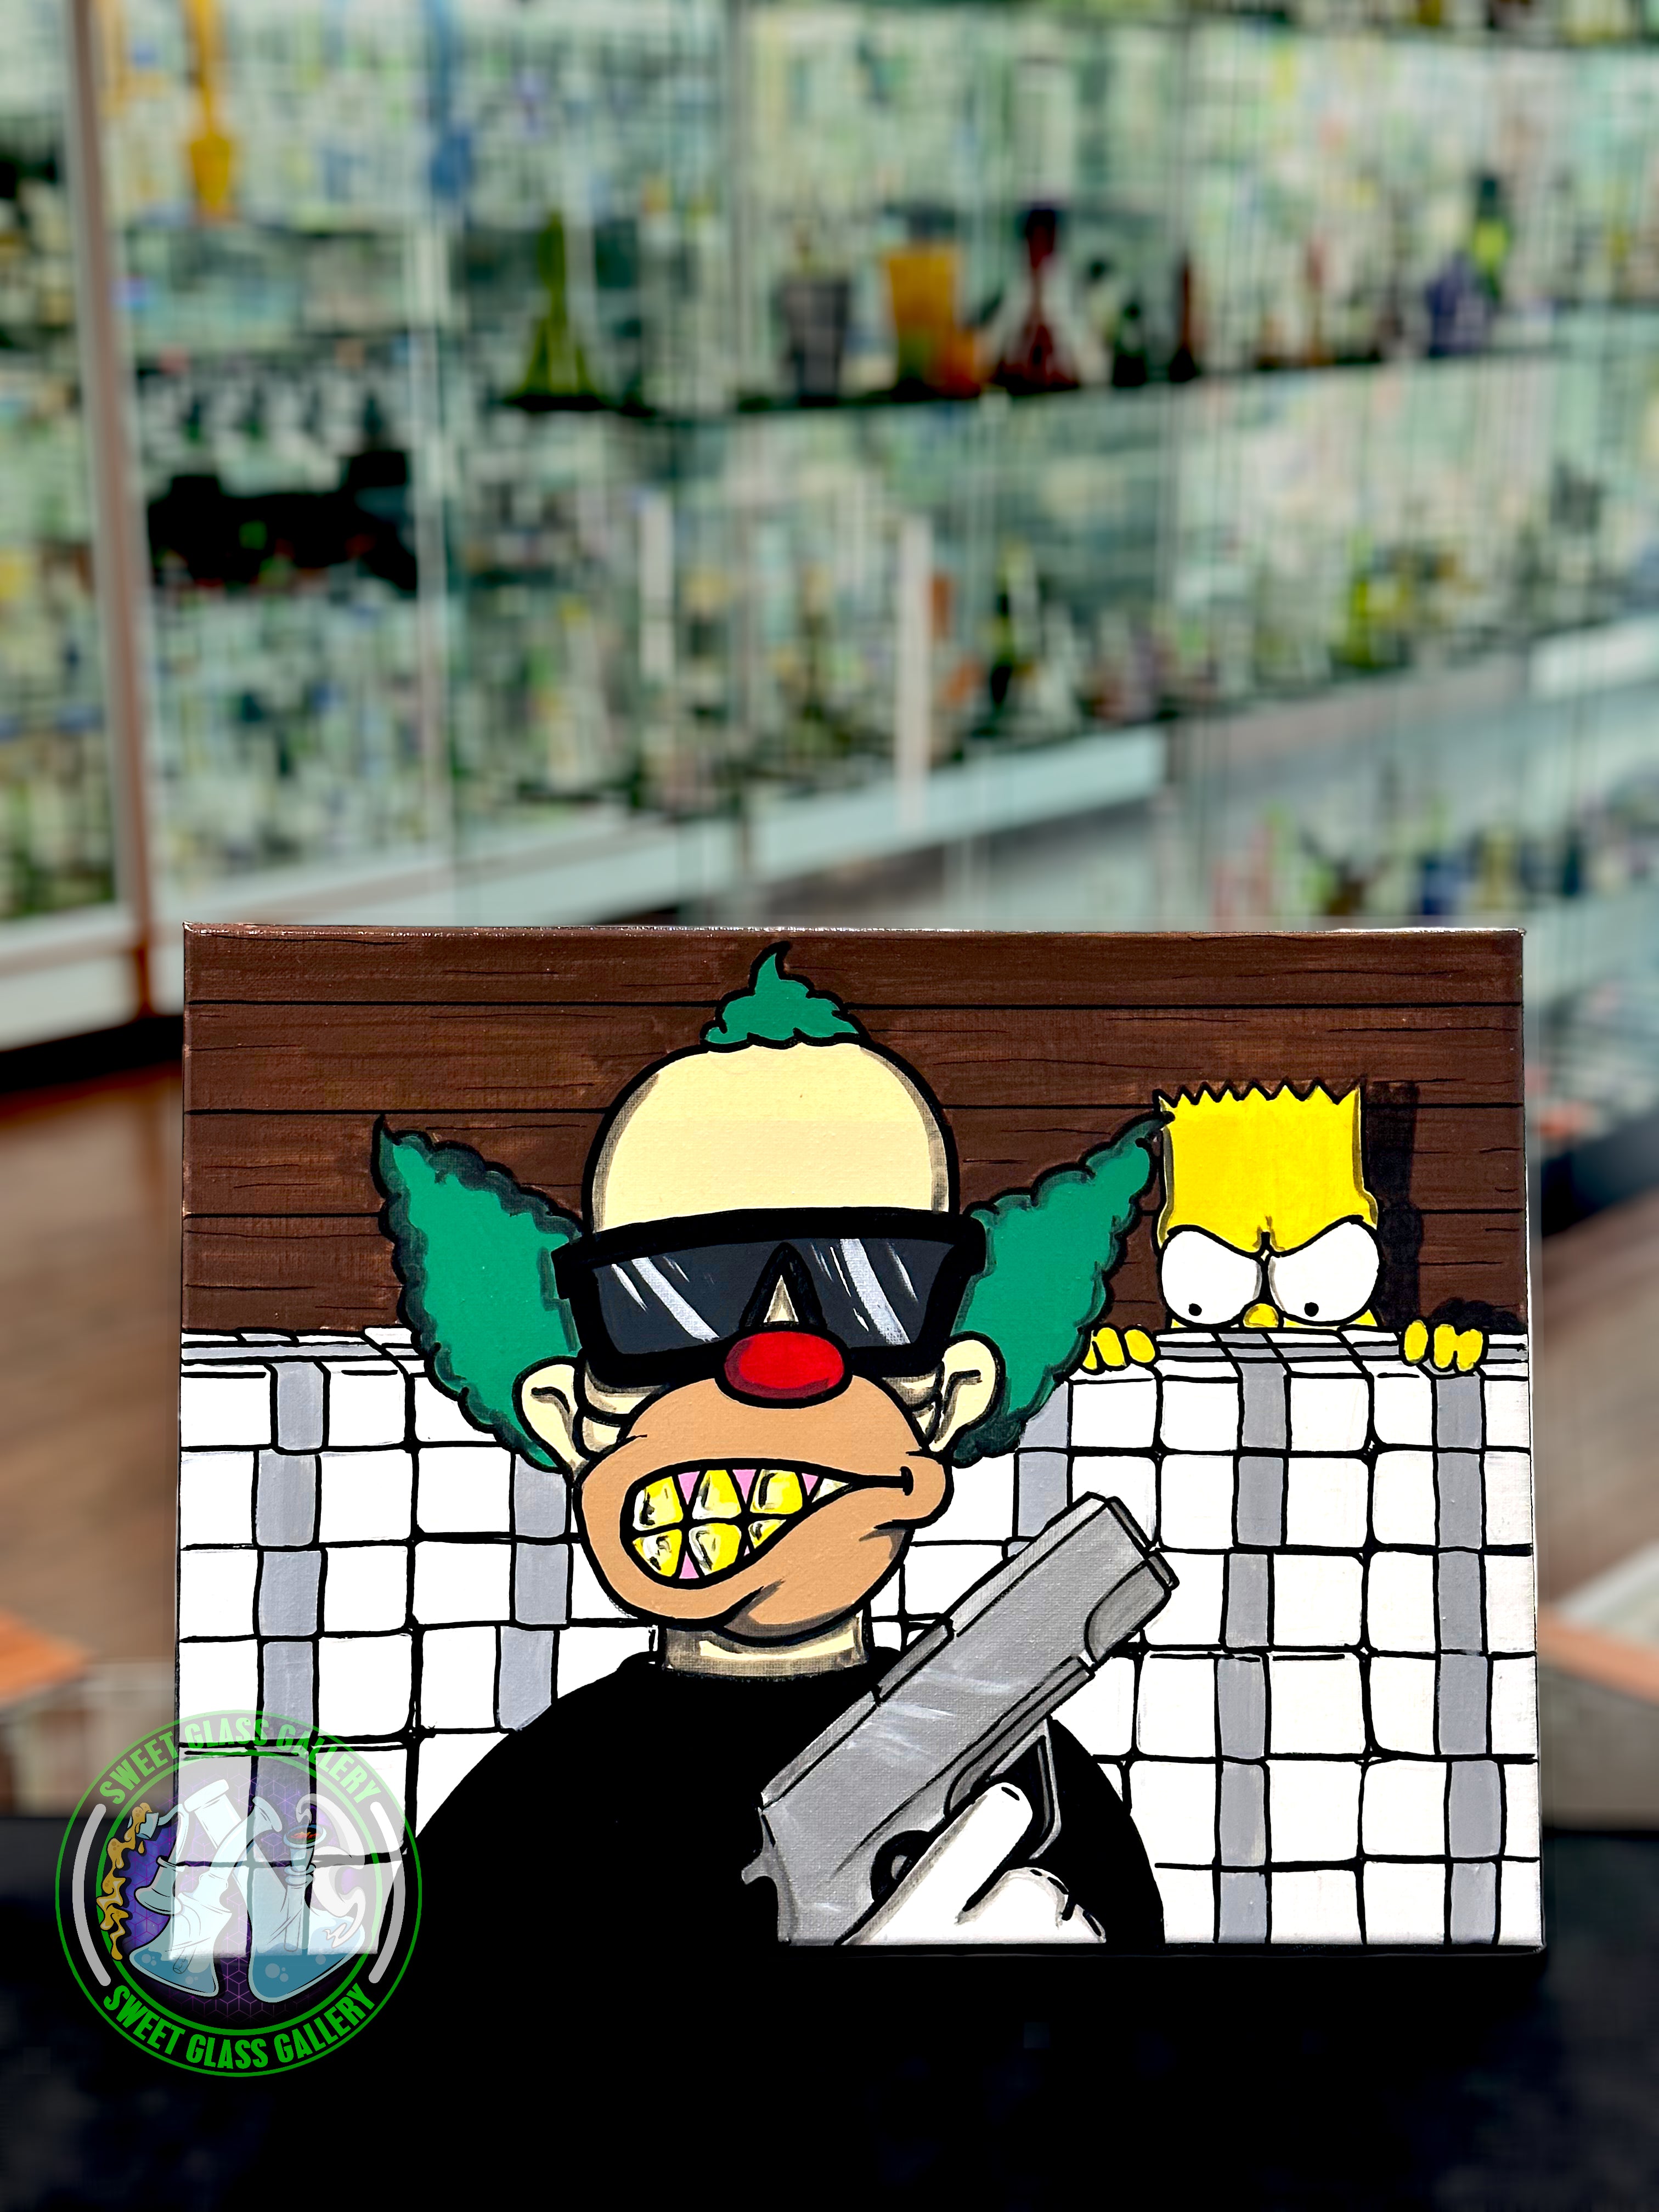 Avila Sicc - Painting (Krusty & Bart - The Simpsons)